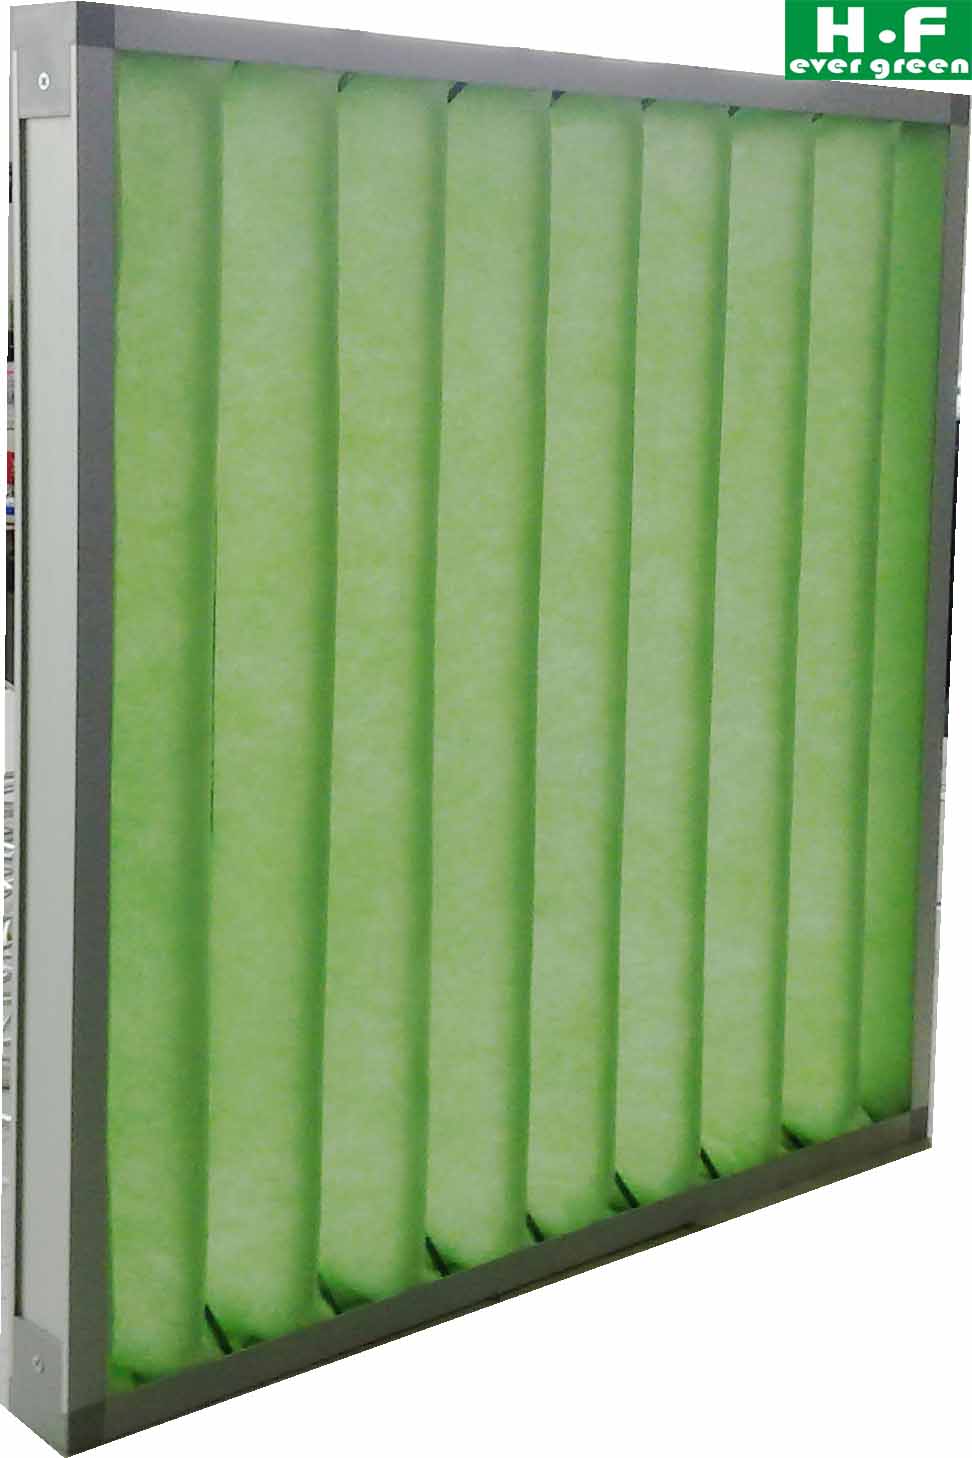 Medium Efficiency Green-White panel air Filter